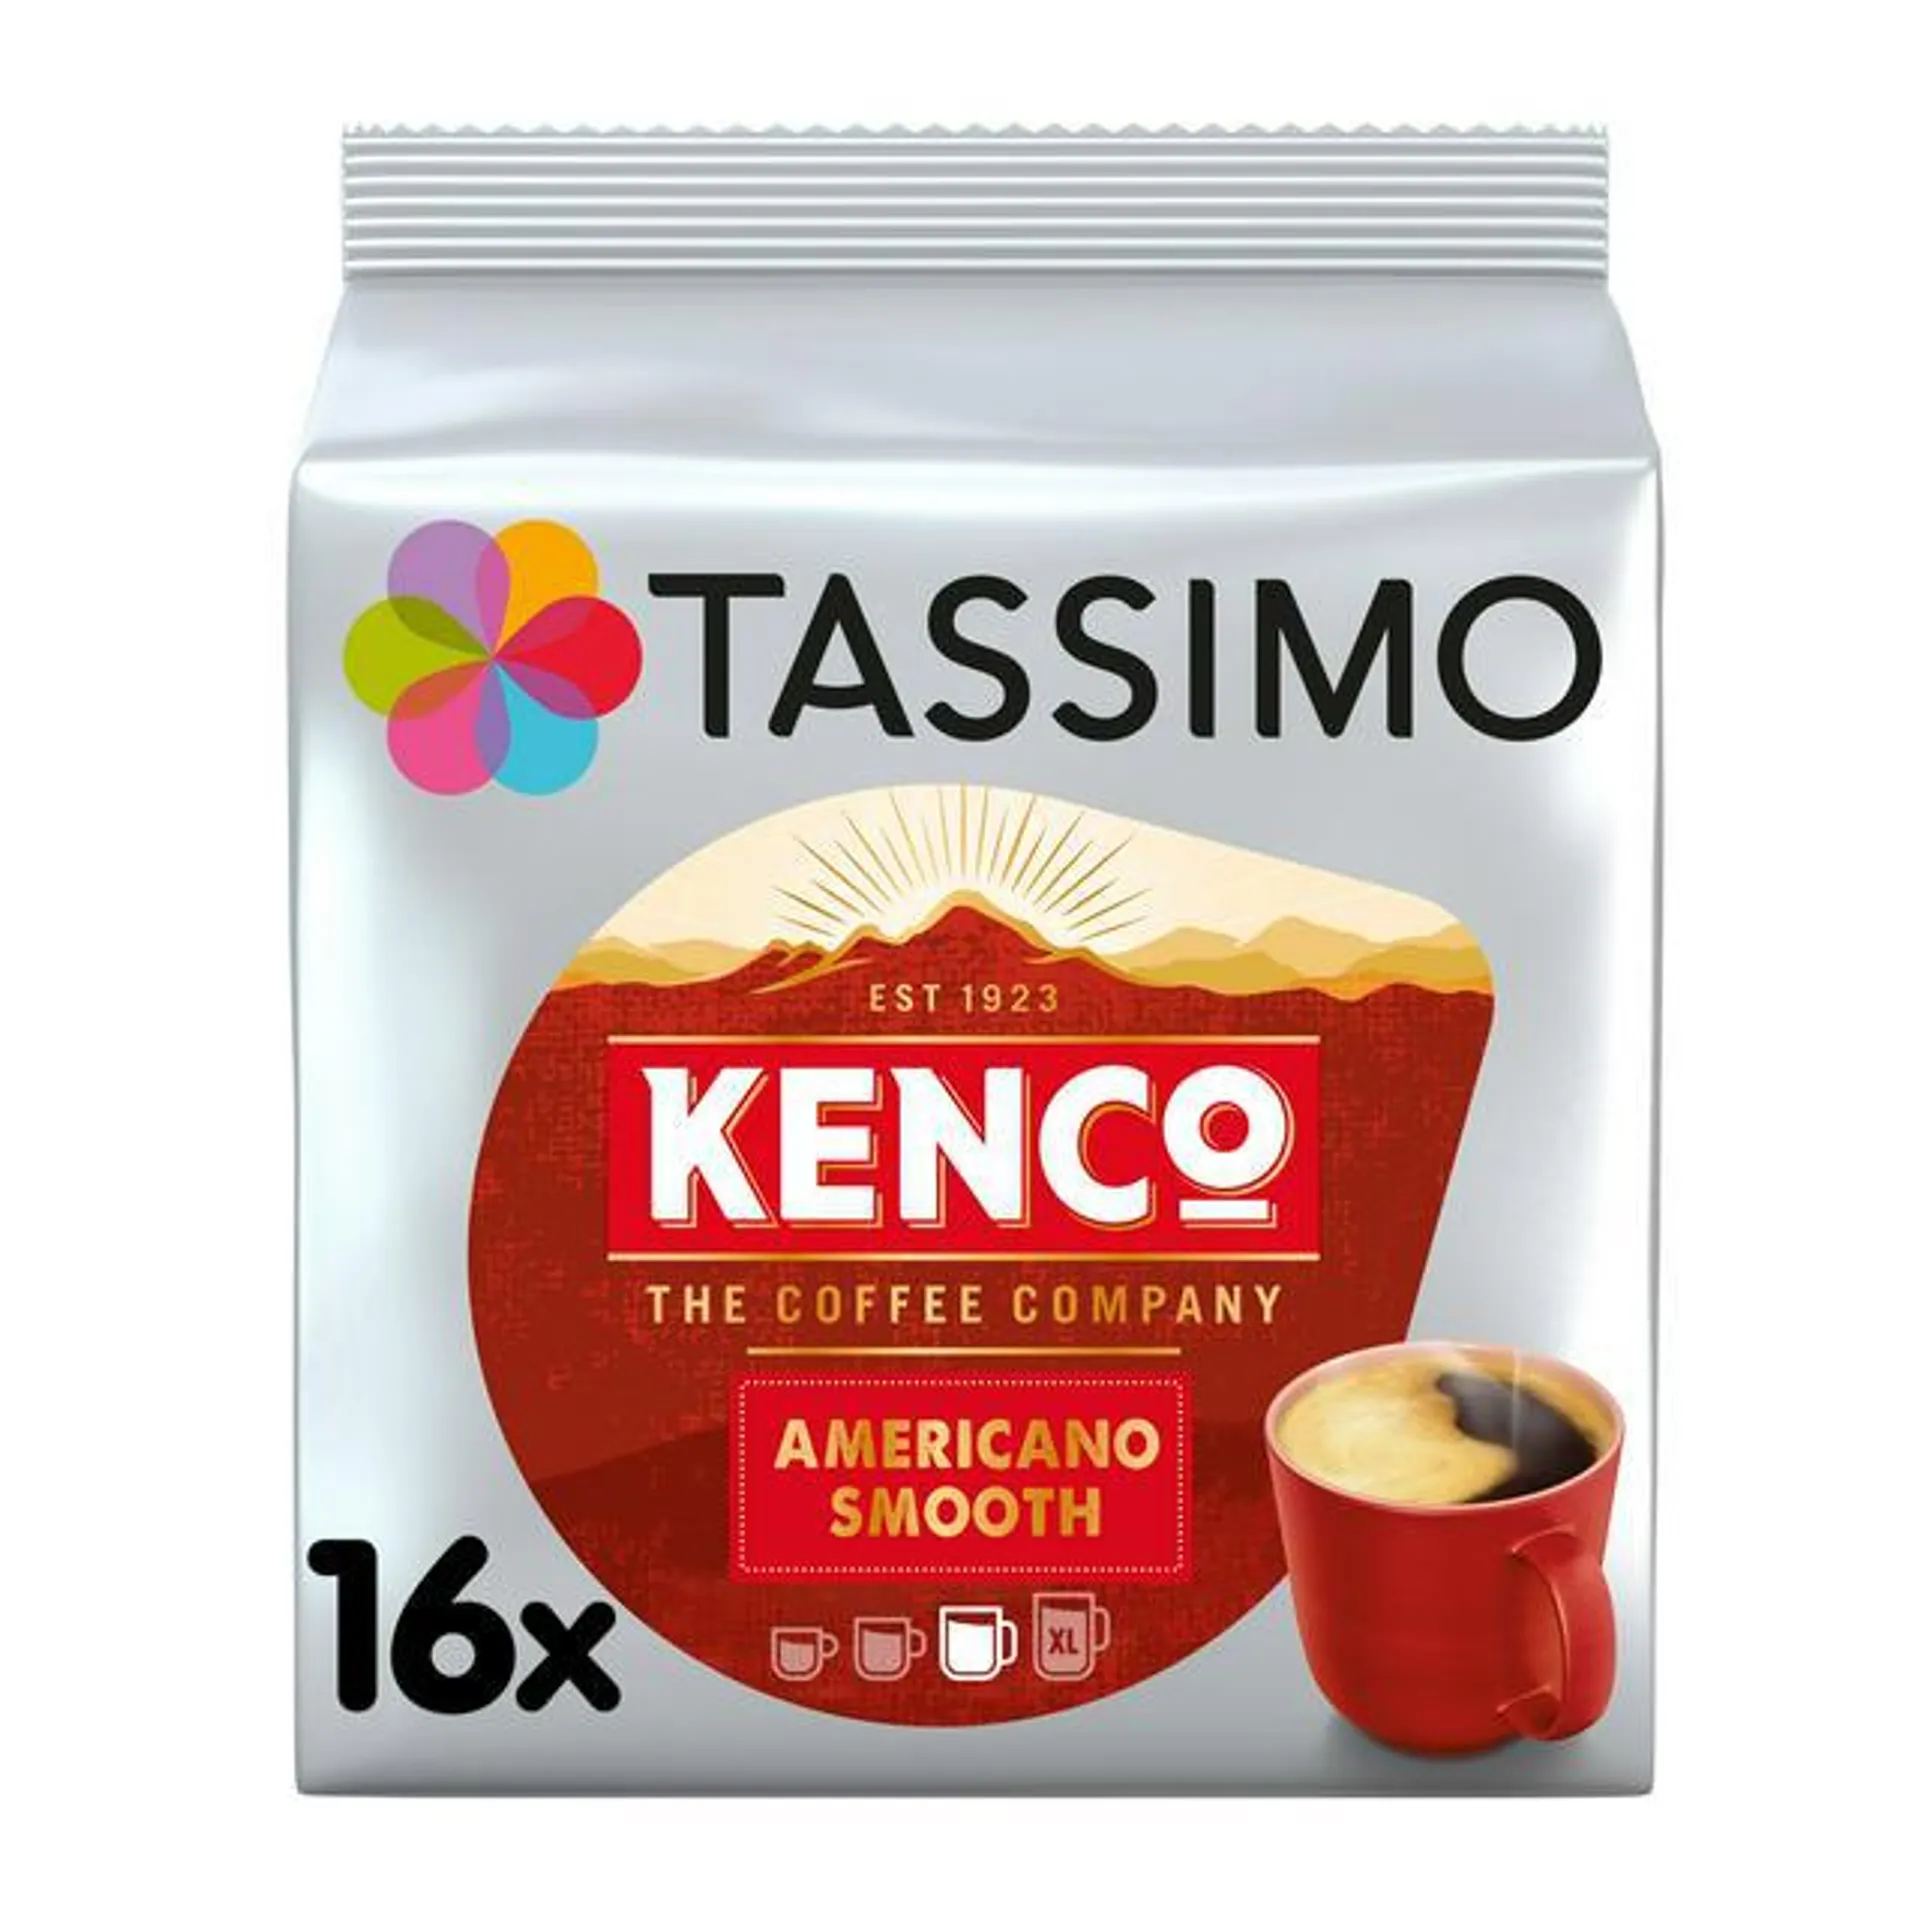 Tassimo Kenco Americano Smooth Coffee Pods x16